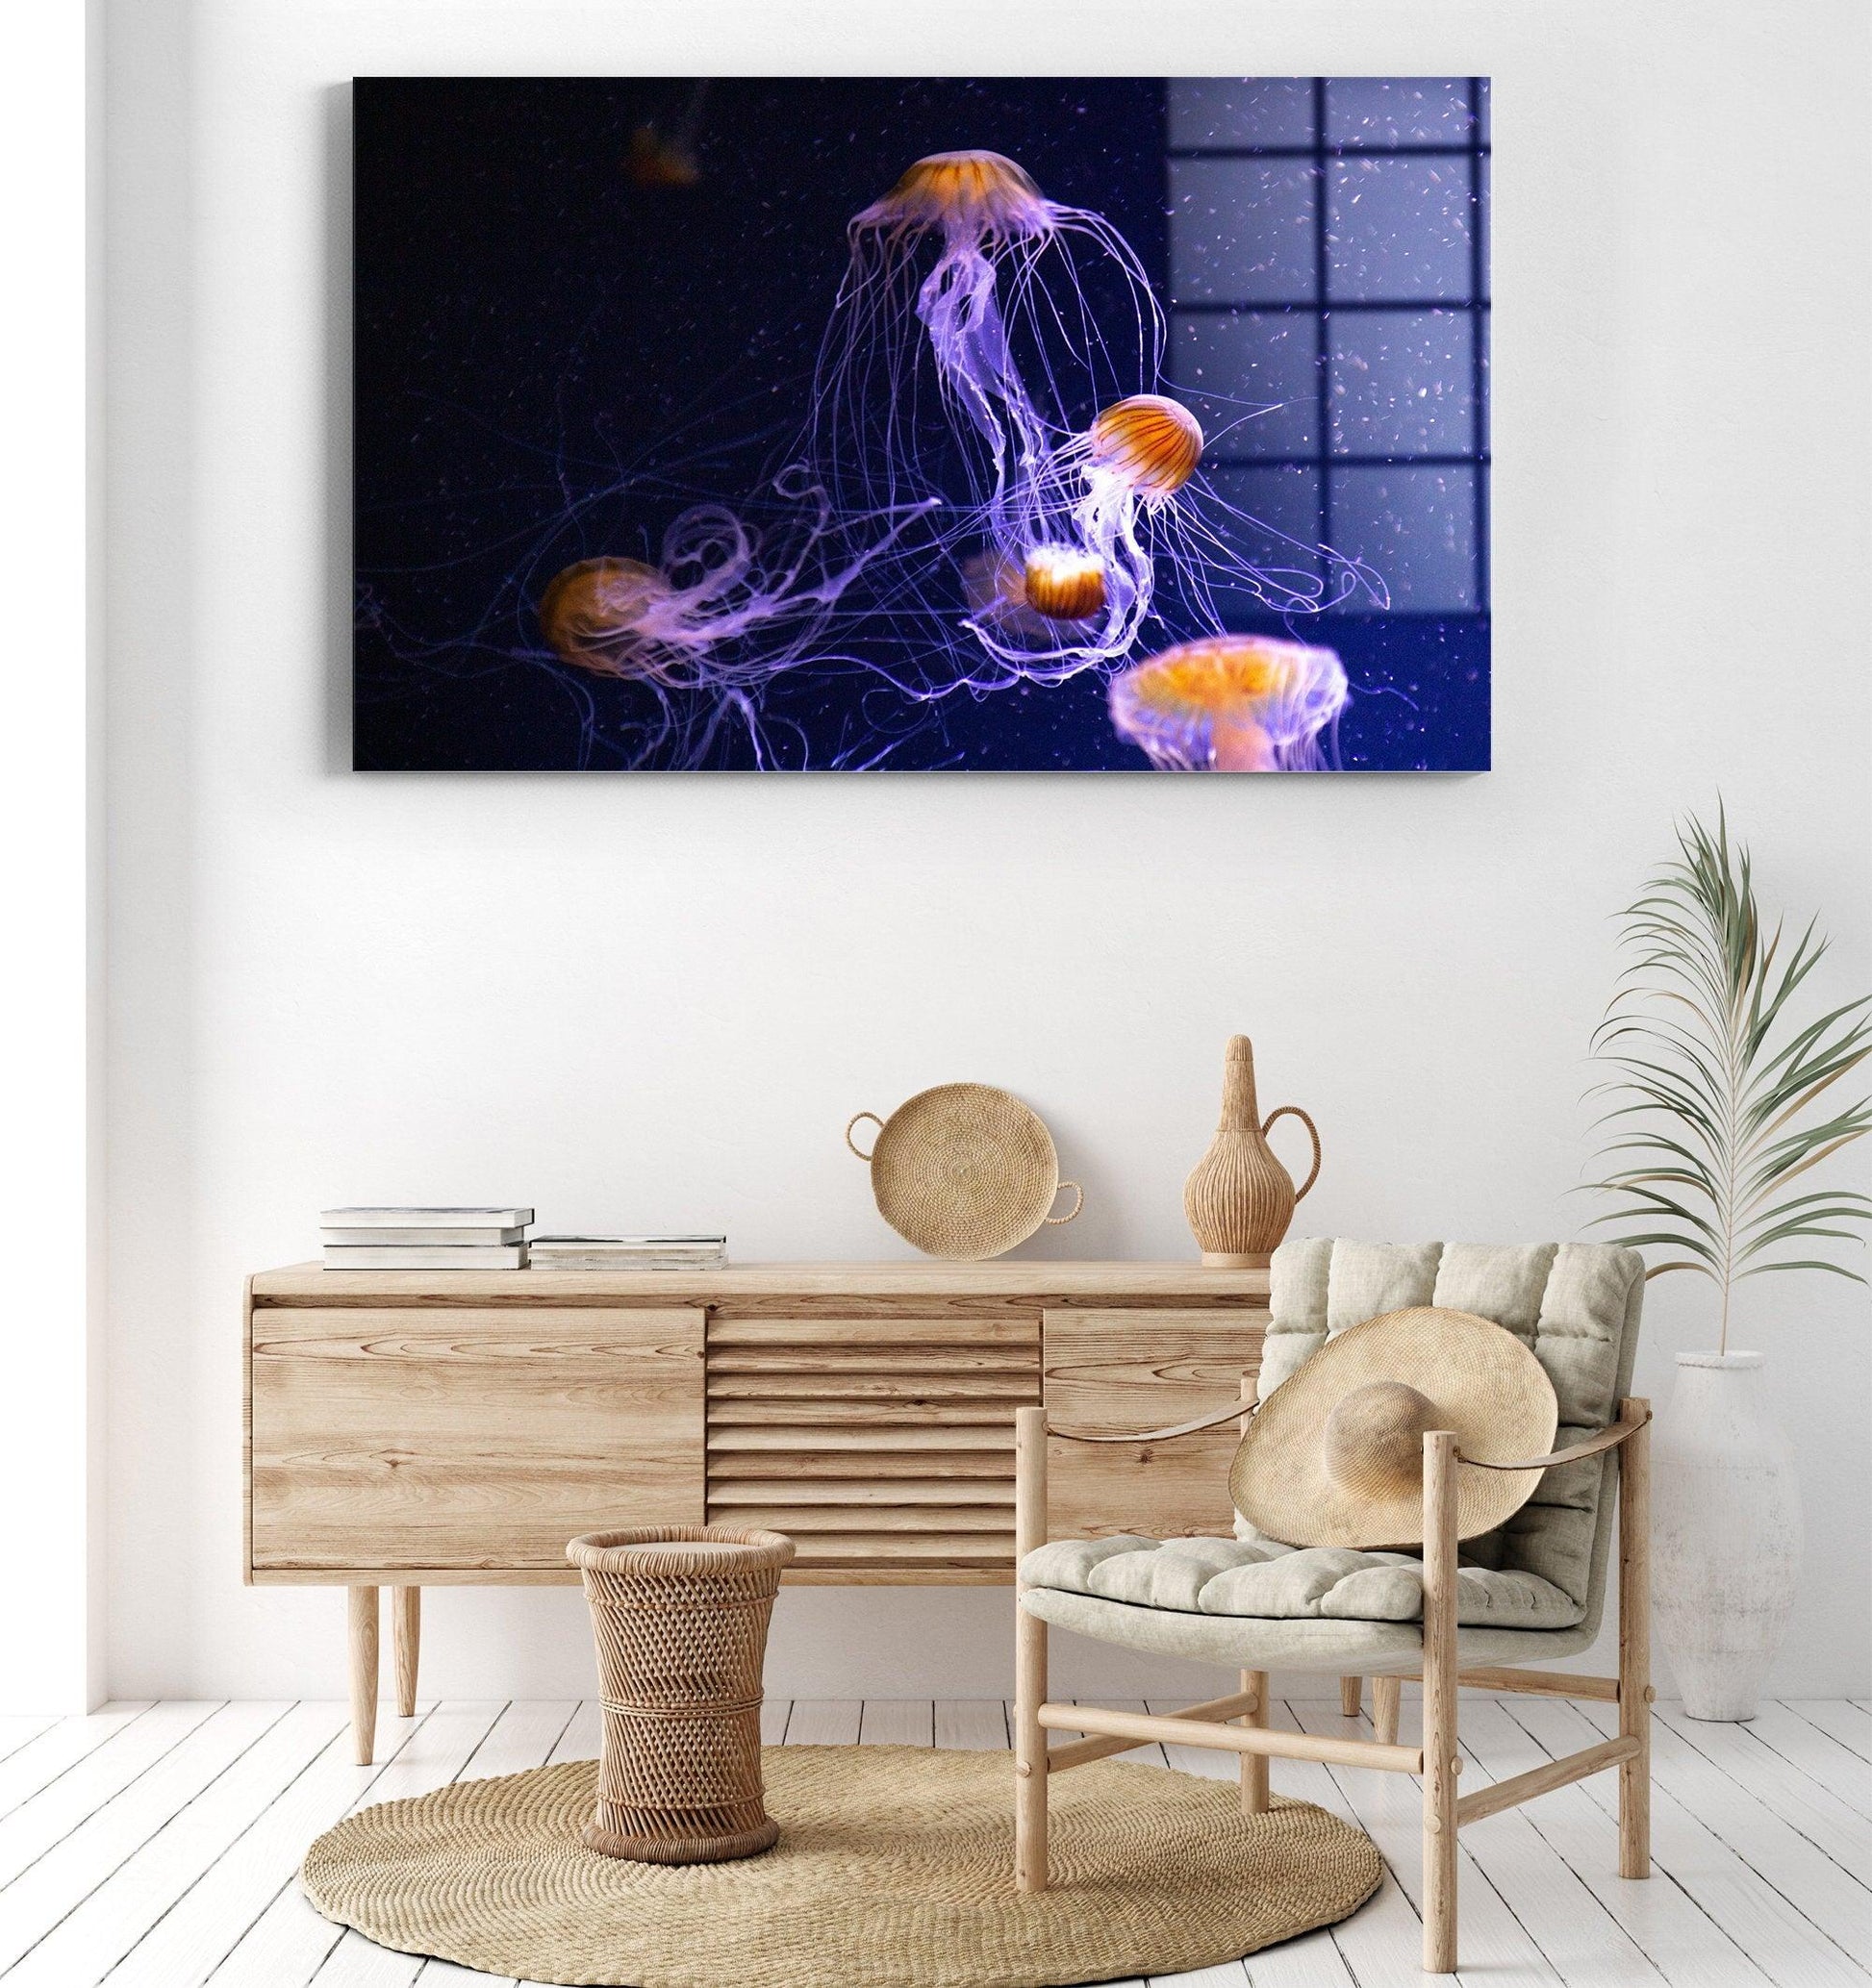 Jellyfish Tempered Glass Wall Art| Jellyfish Large Wall Art, Glass Printing Wall Art, Glass Art Wall Decor, Home Decor, Animal Wall Decor - TrendiArt